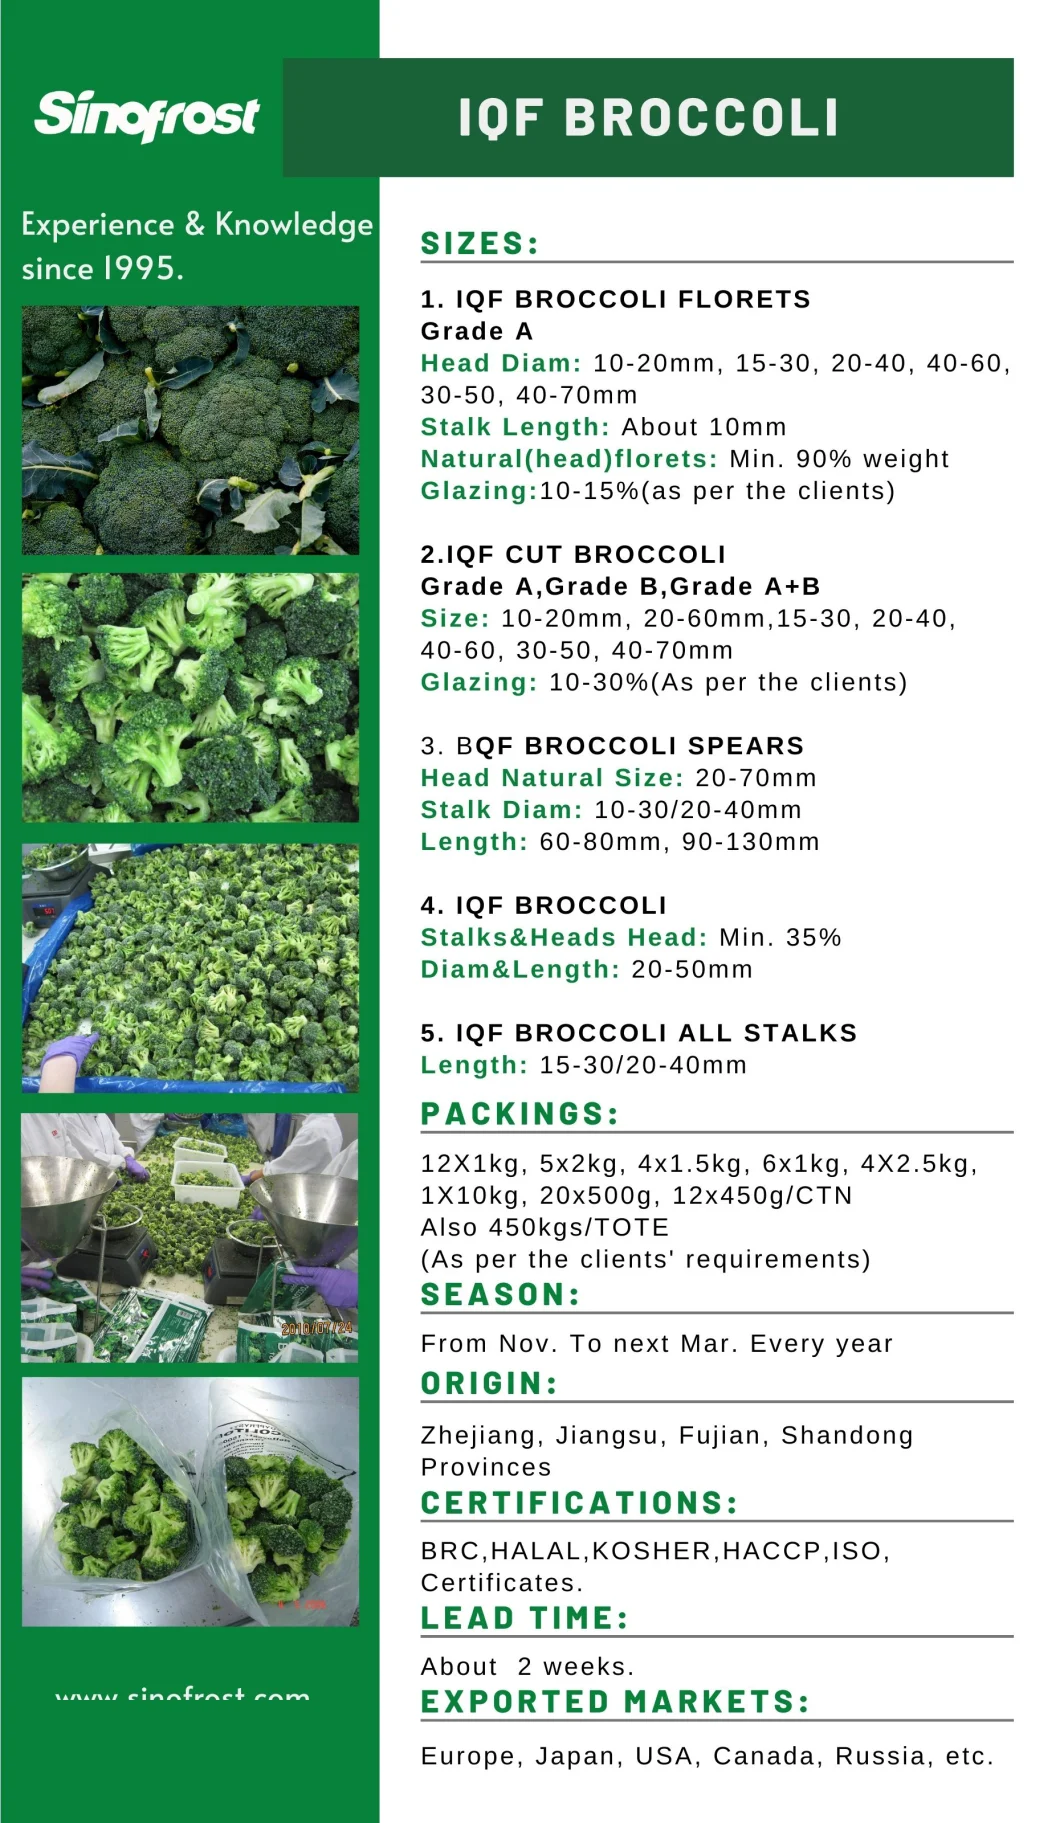 New Crop, Frozen Broccoli, IQF Broccoli, Bqf Broccoli Spears, Bqf Broccoli Cuts, IQF Broccoli Stalks, IQF Broccoli Florets, Frozen Broccoli Florets, Brc/Halal